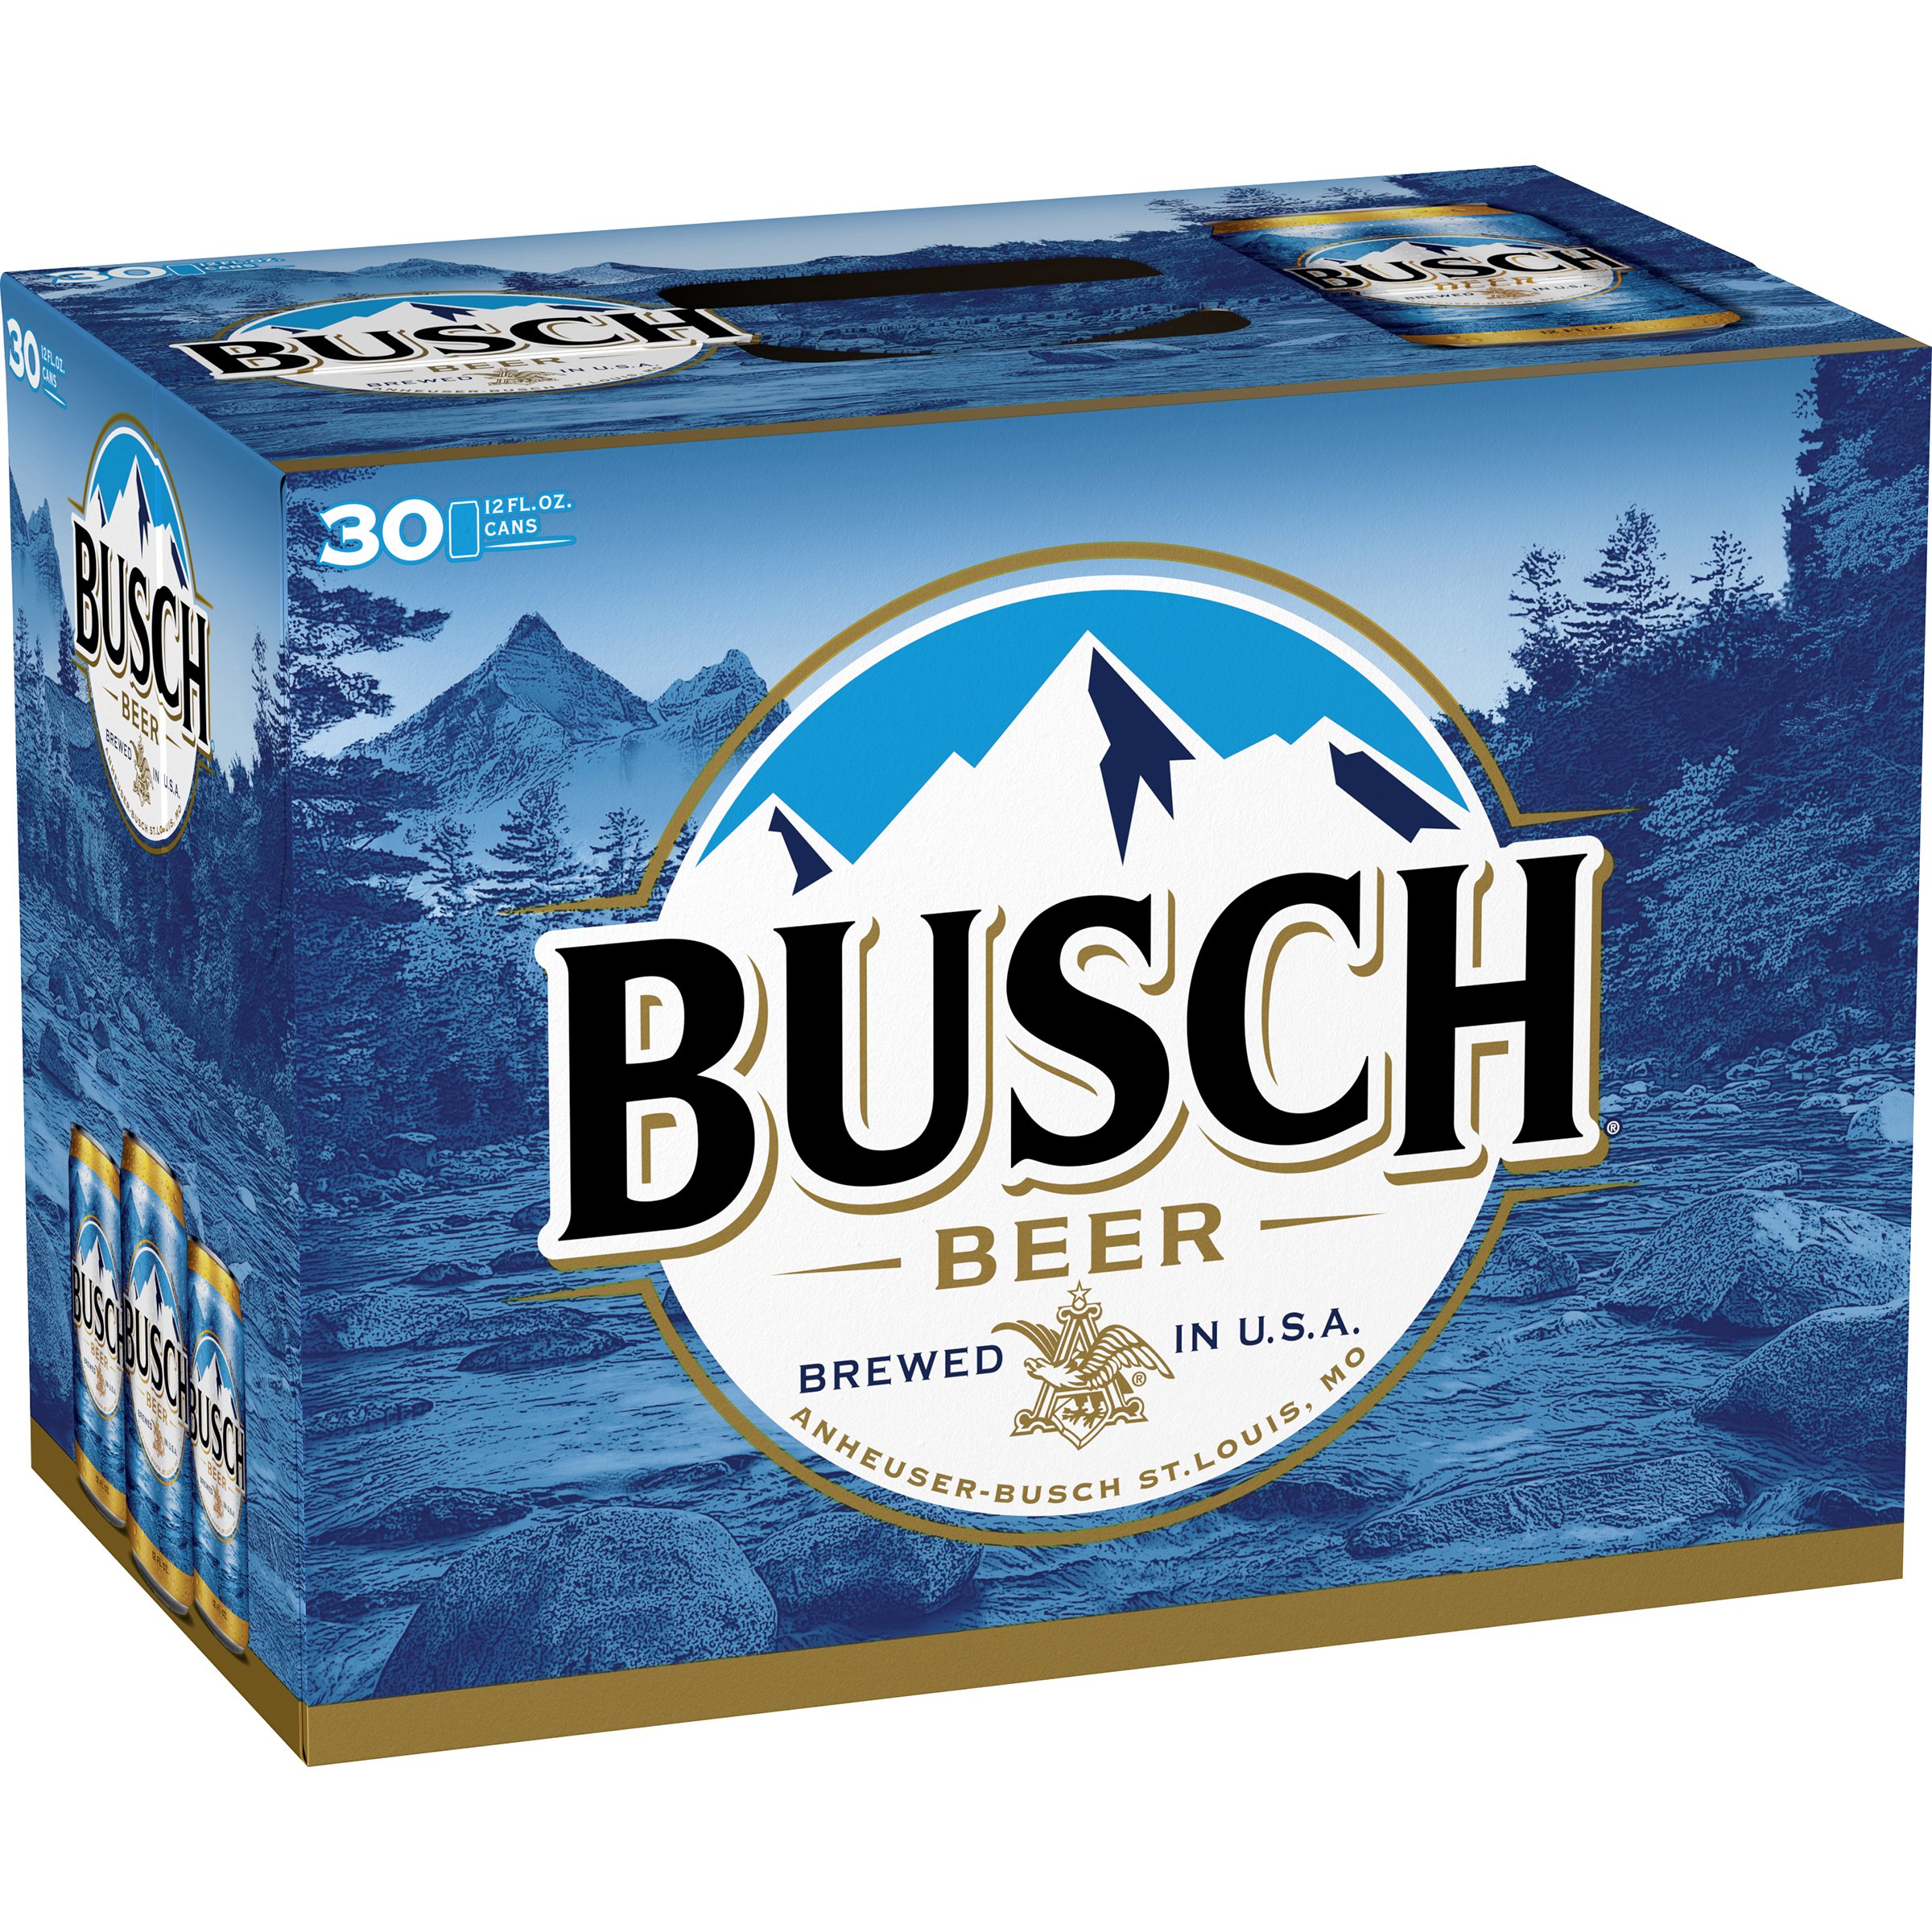 Busch Beer 30 Pk Cans At H E B